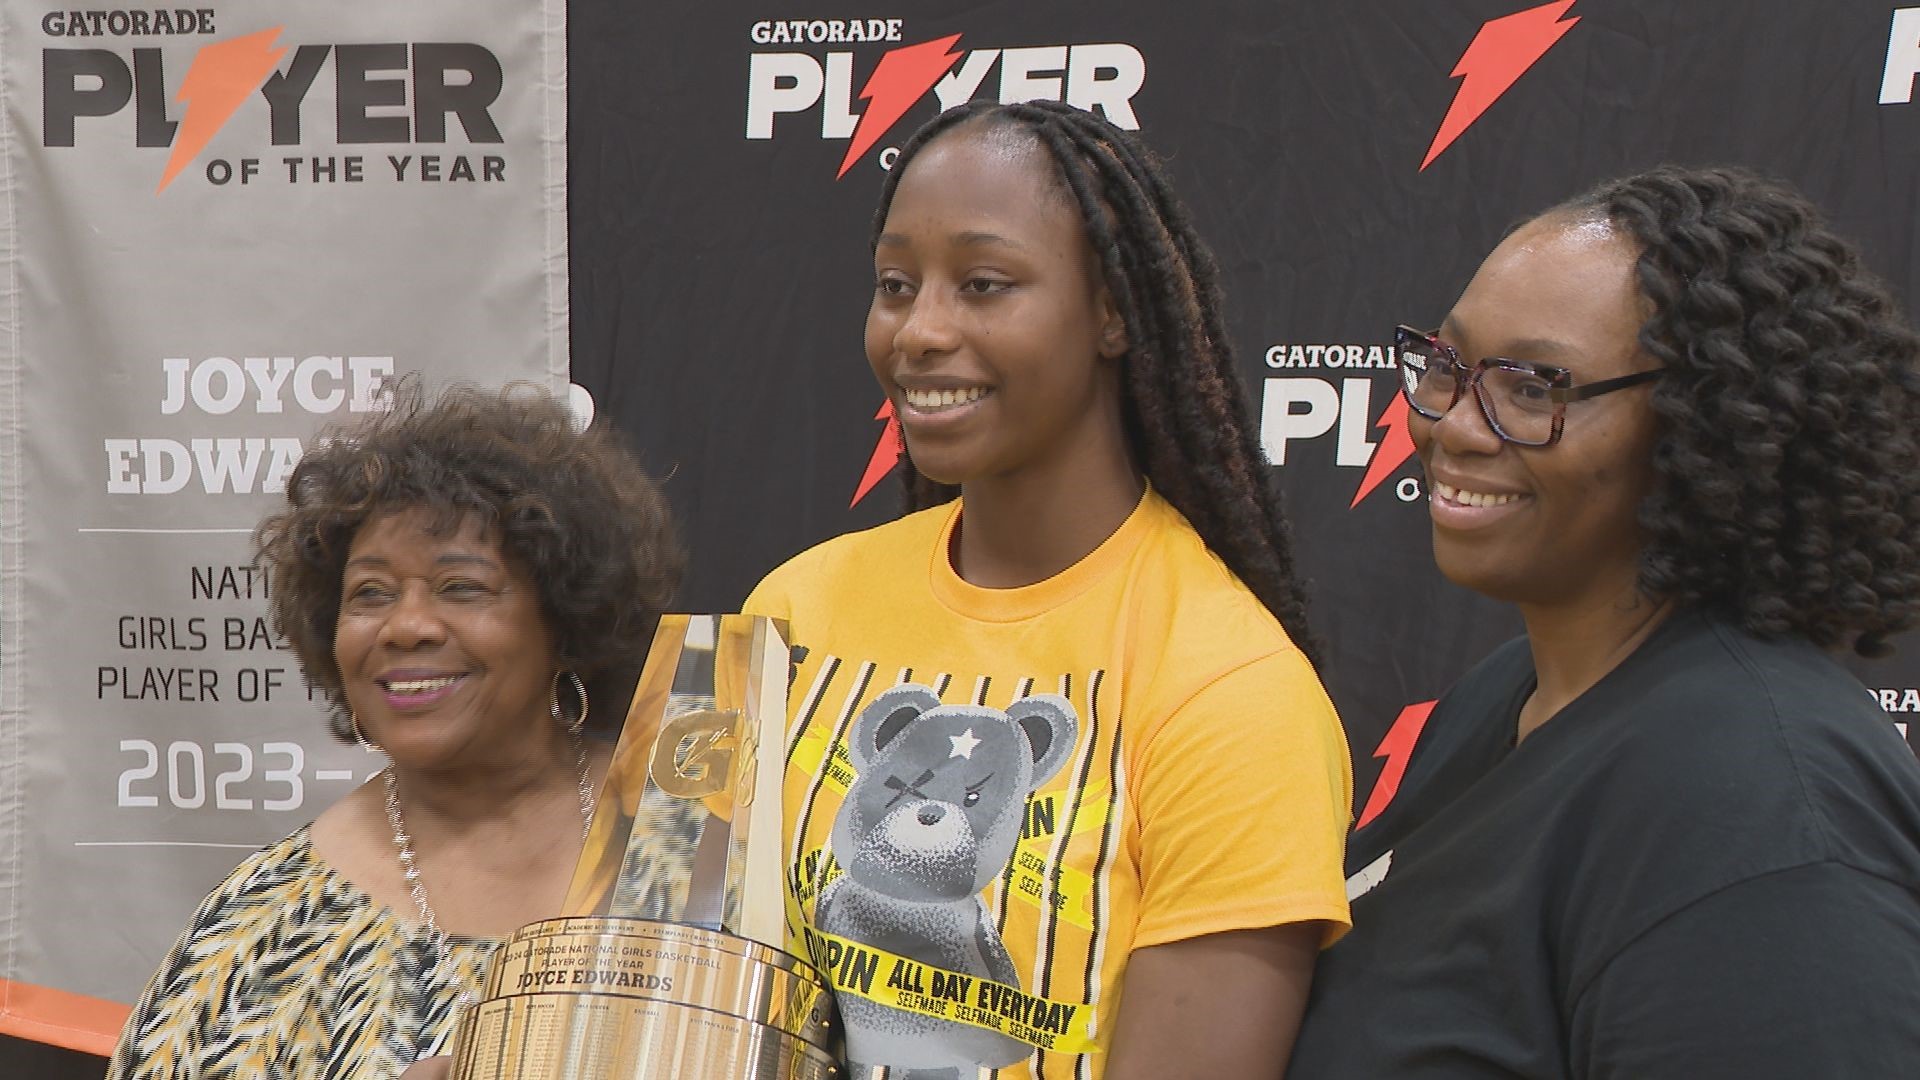 A look at the surprise Gatorade trophy presentation involving Camden's Joyce Edwards, WNBA star Satou Sabally and Camden officials and dignitaries.